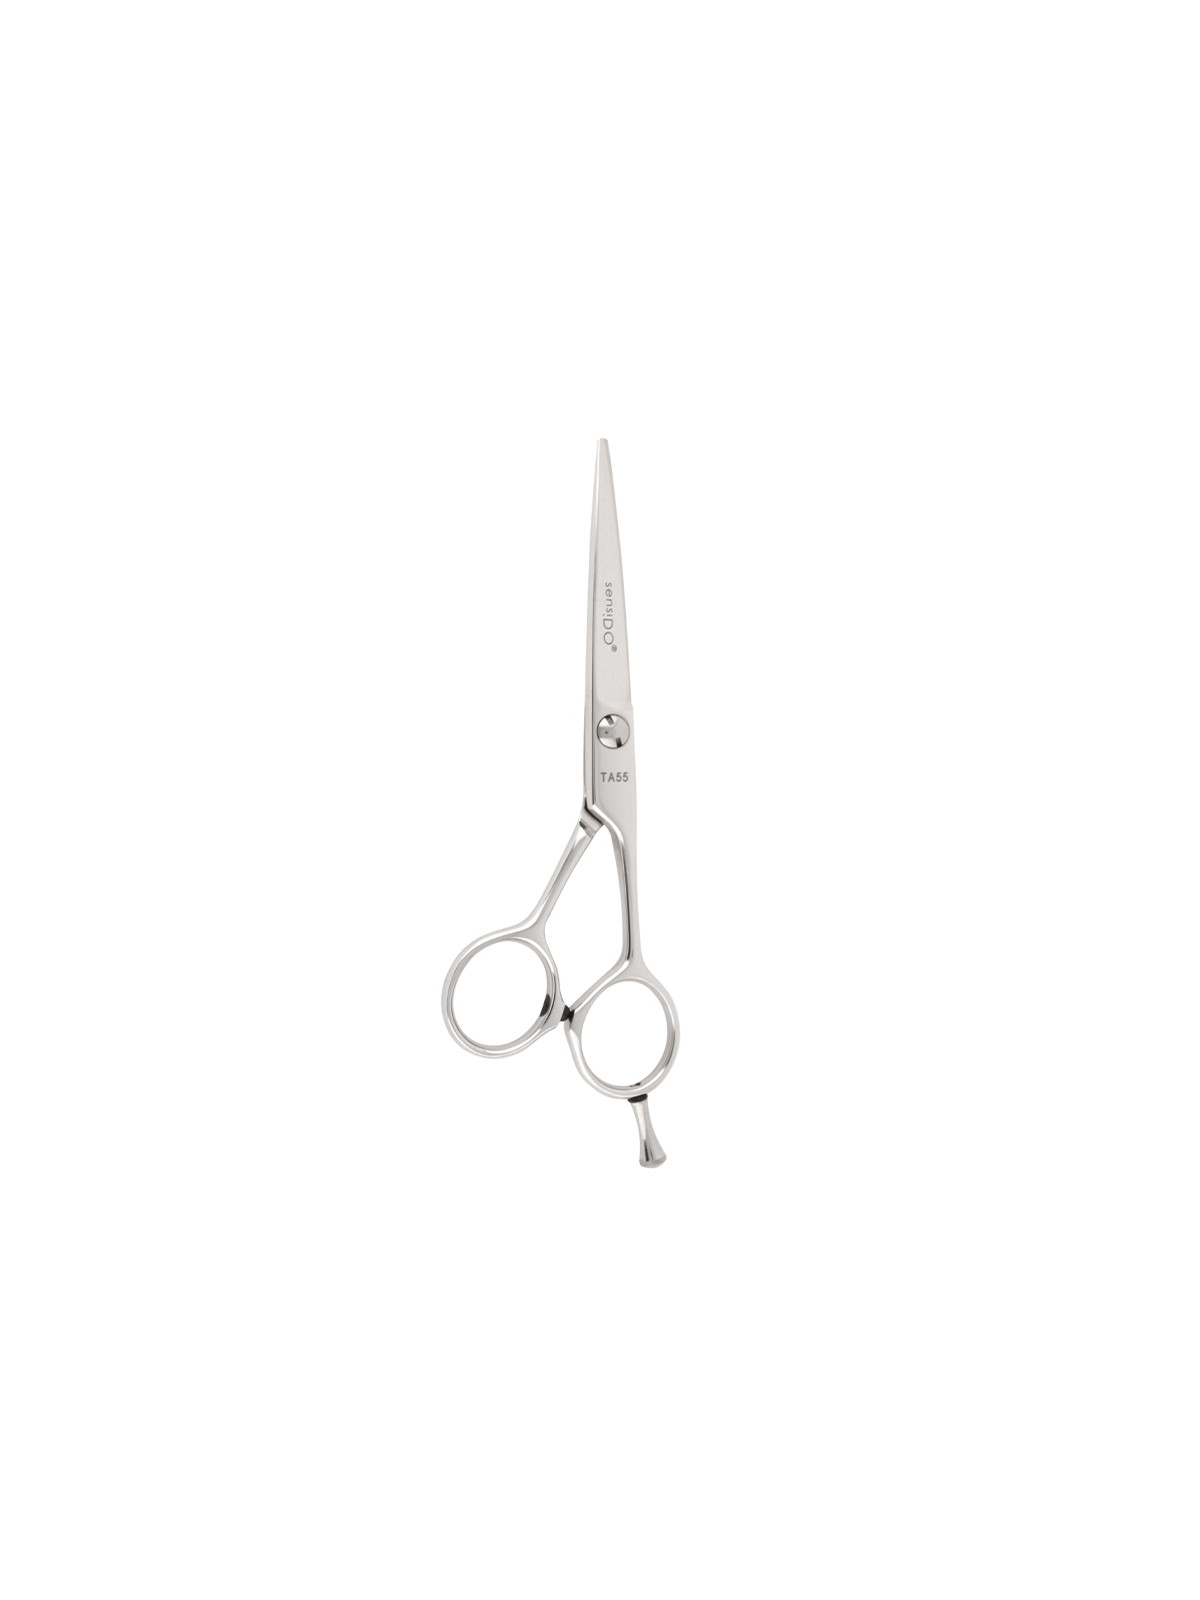 SensiDO TA left hand cutting scissors